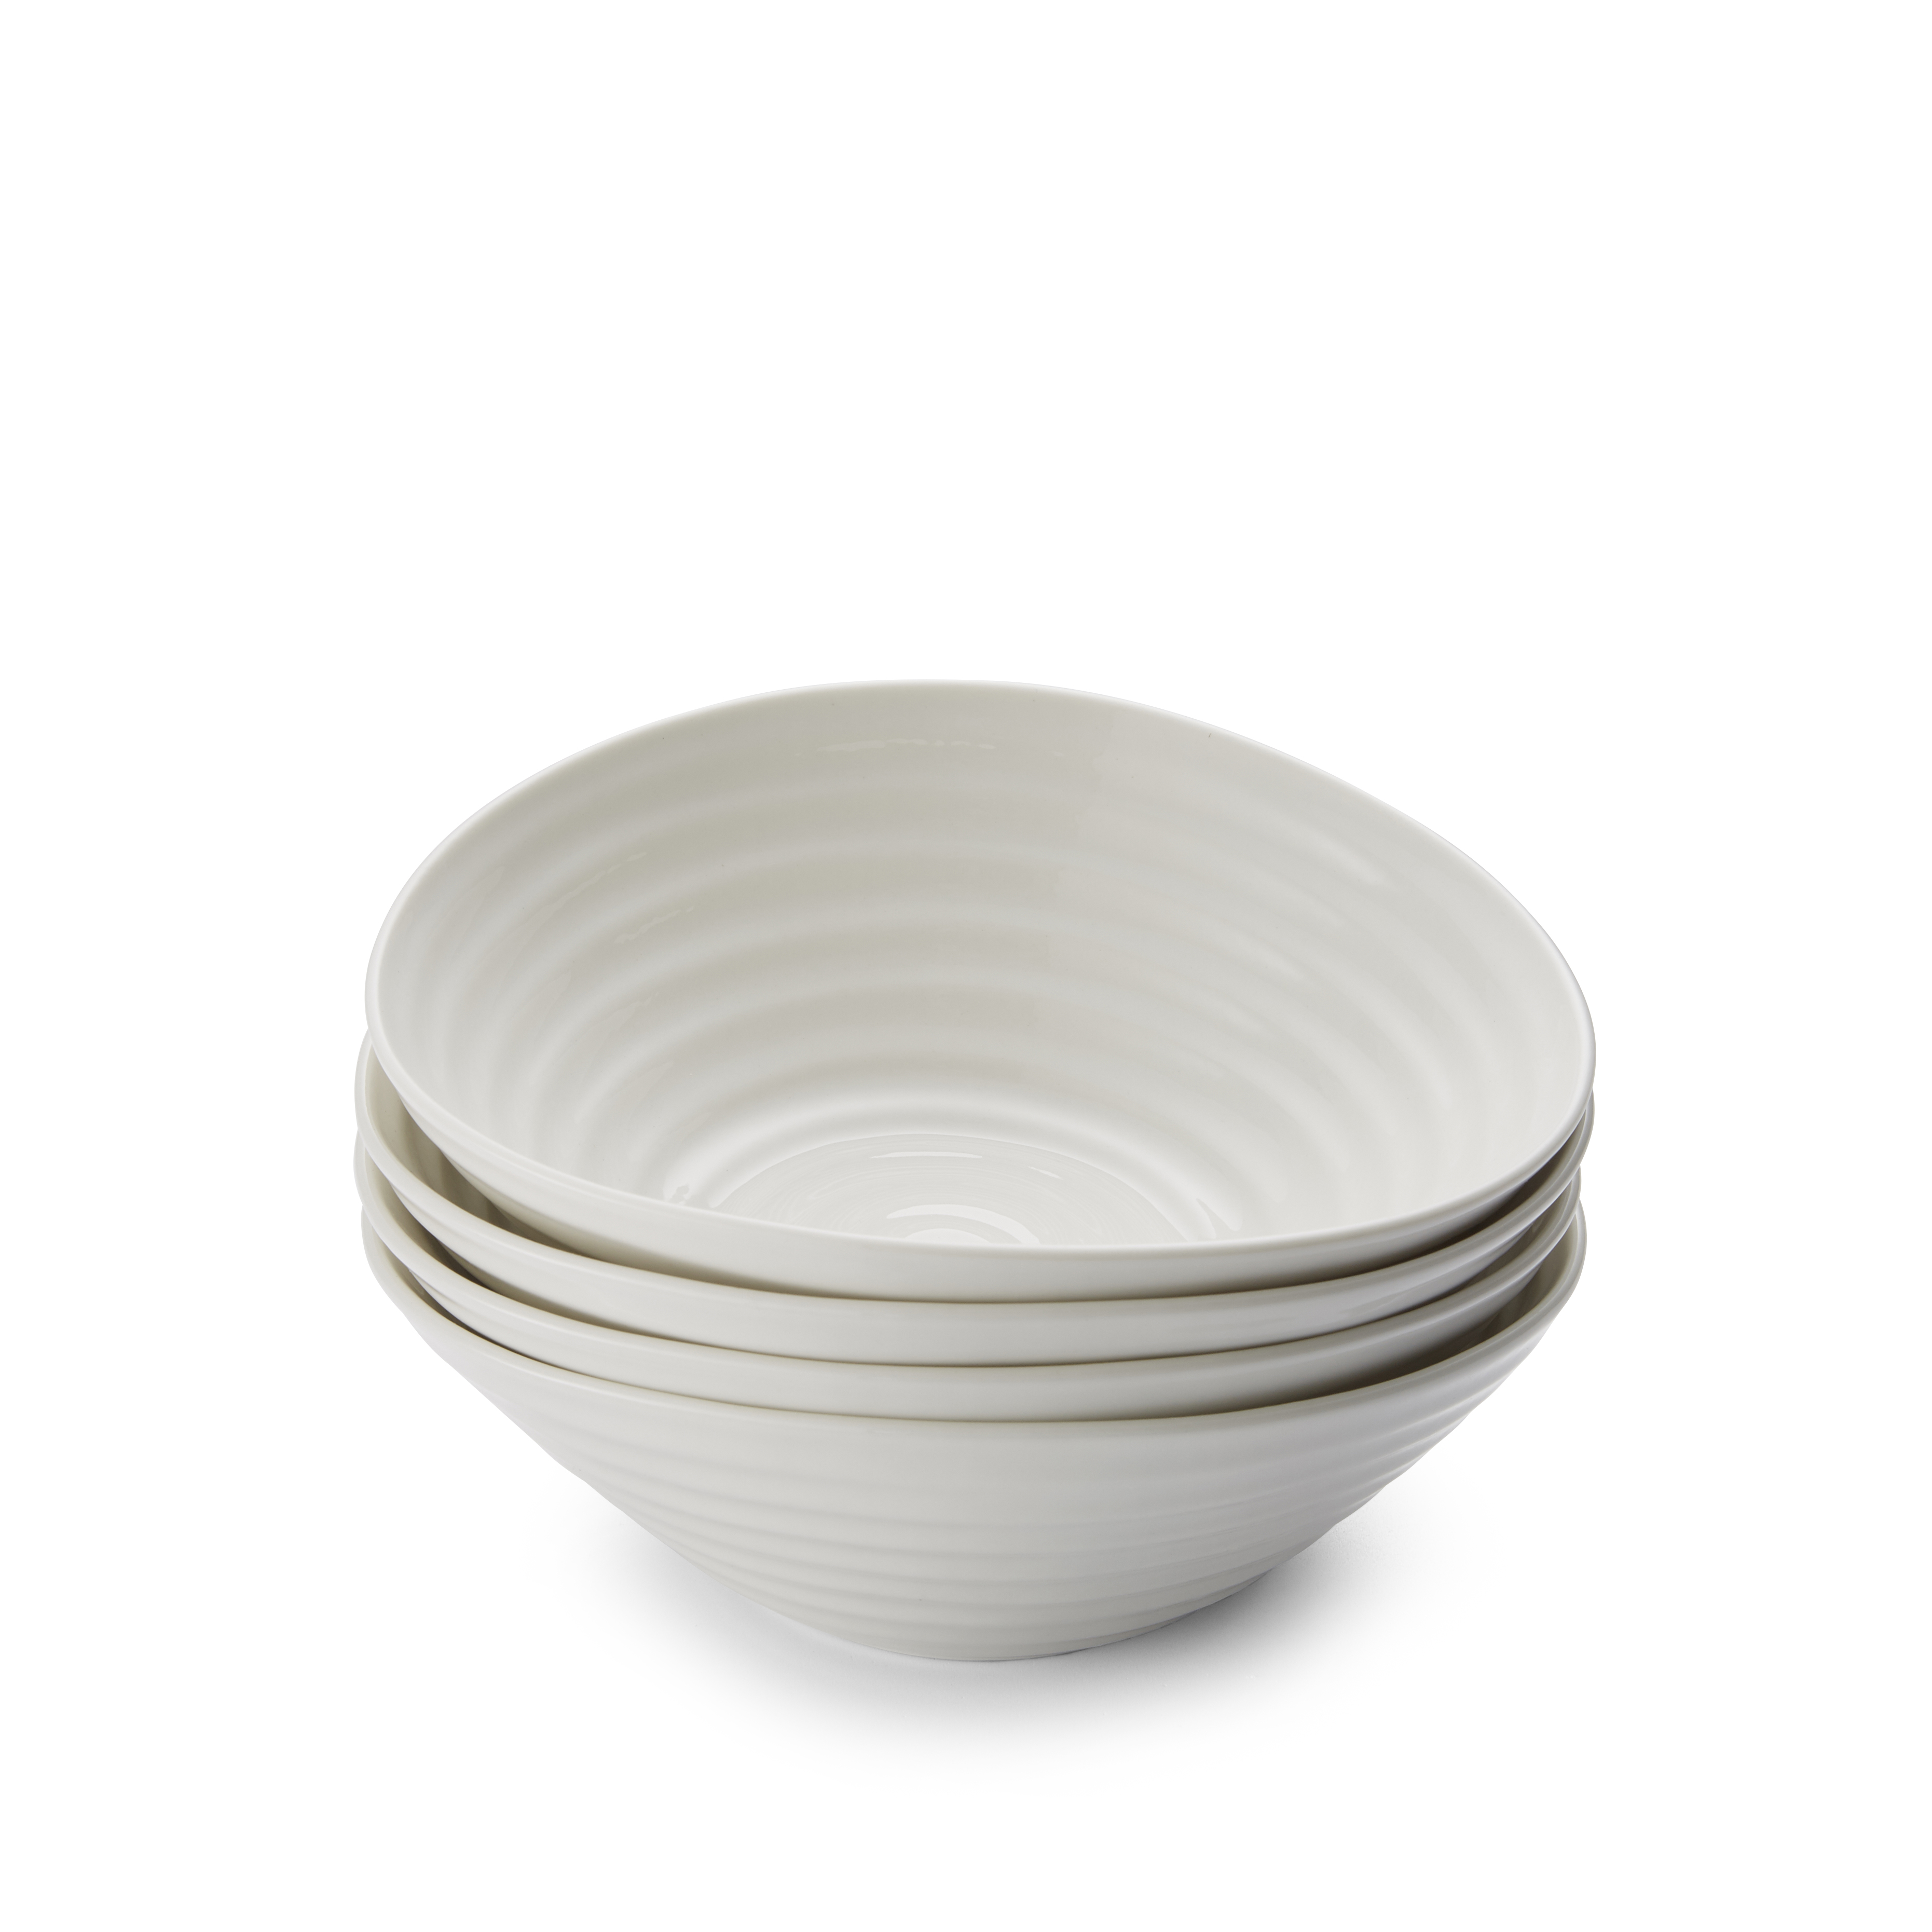 Sophie Conran White Set of 4 Cereal Bowls image number null